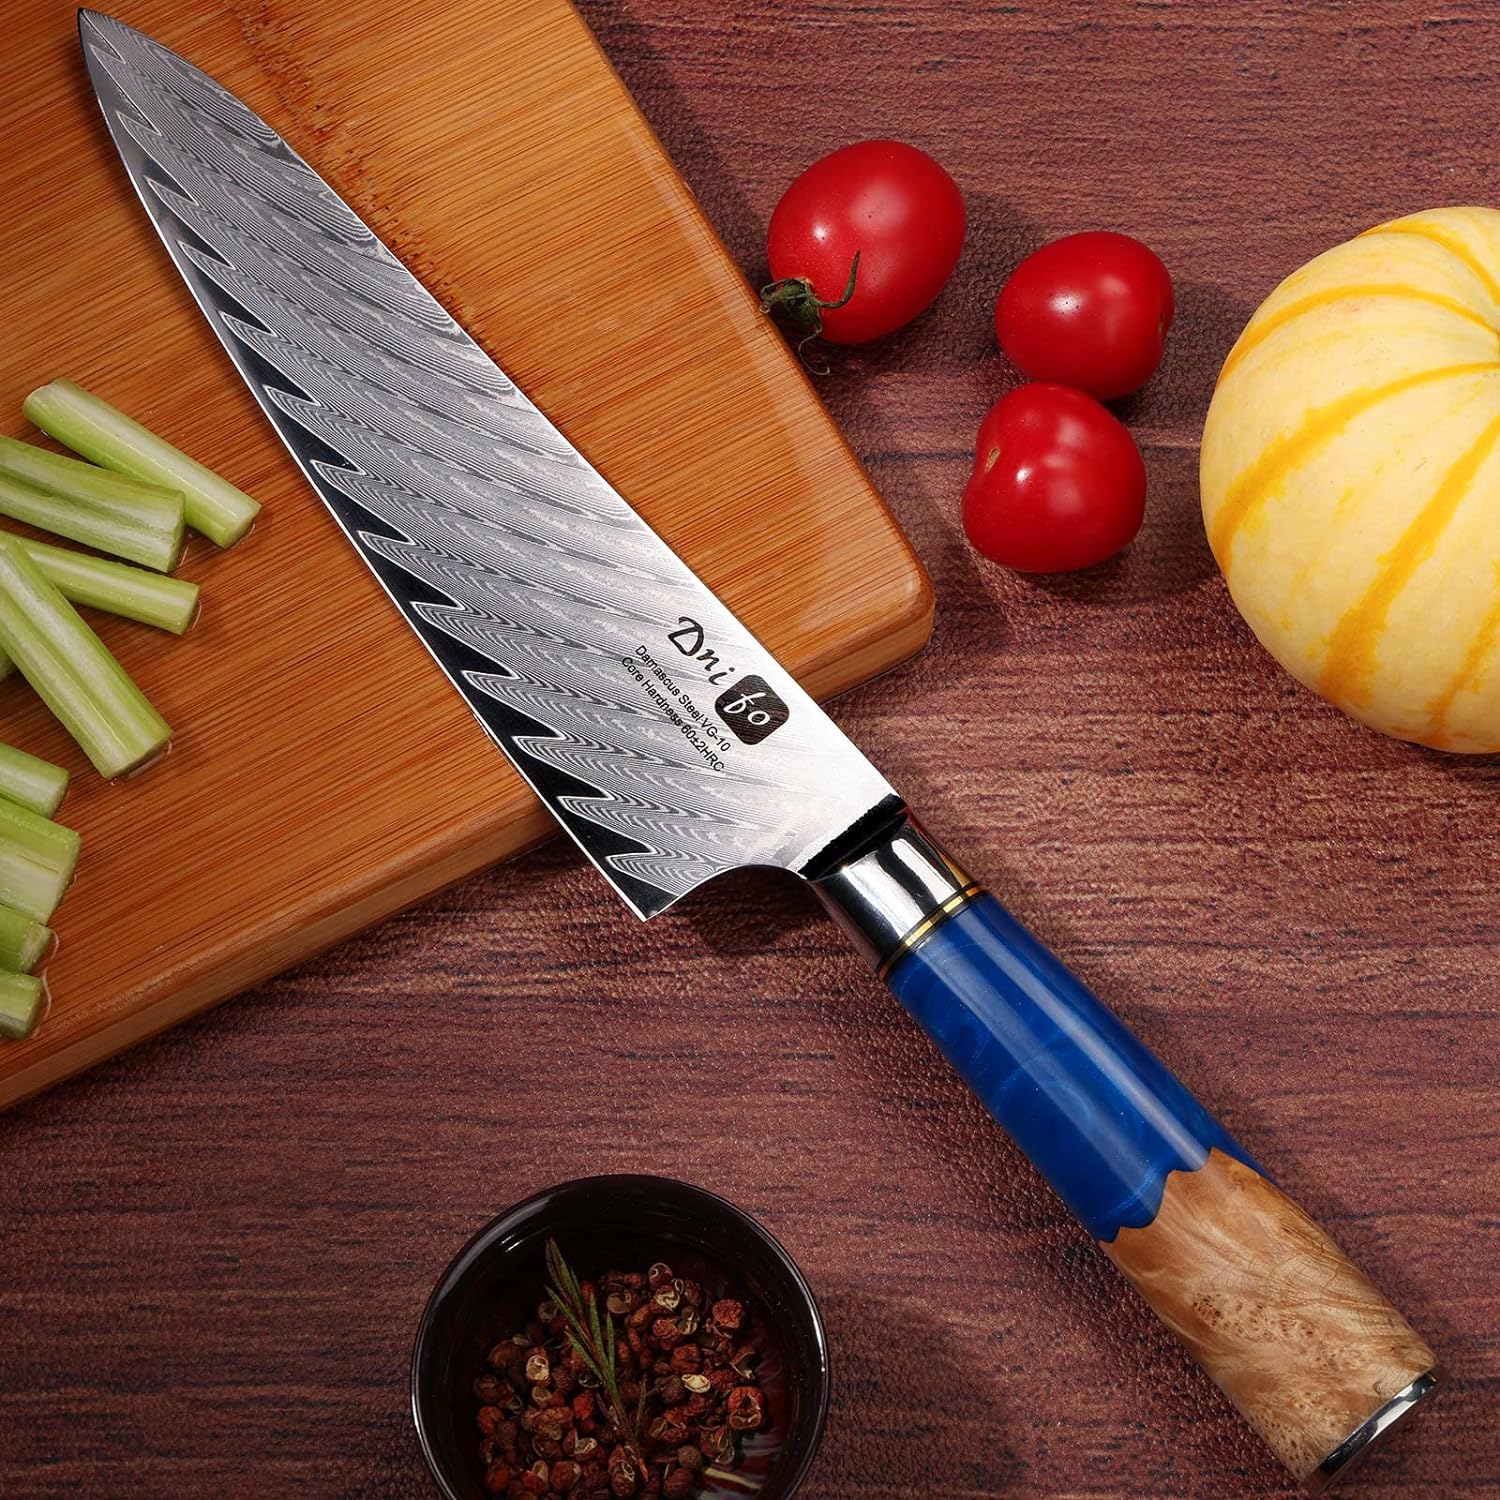 Chef Knife, 8-inch Japanese Kiritsuke Chef Knife, Super Sharp Stainless Steel Professional High Carbon Japanese Kitchen Knife, Ergonomic Resin Wood Handle with Sheath Gift Box